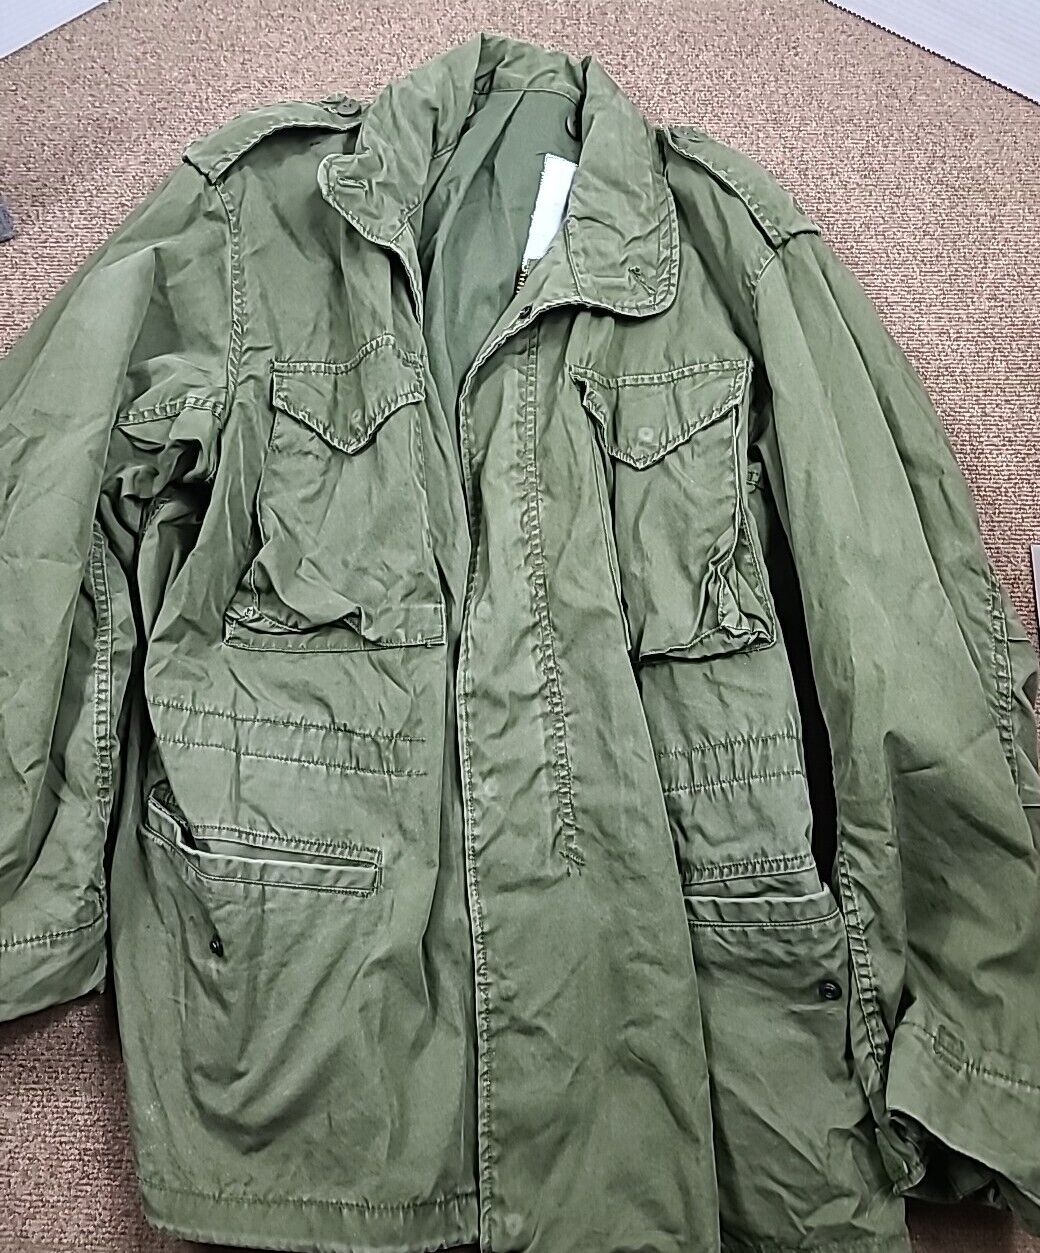 Vintage 1980s 1970s Military Army Cold Weather Jacket Coat OG-107 Field LARGE